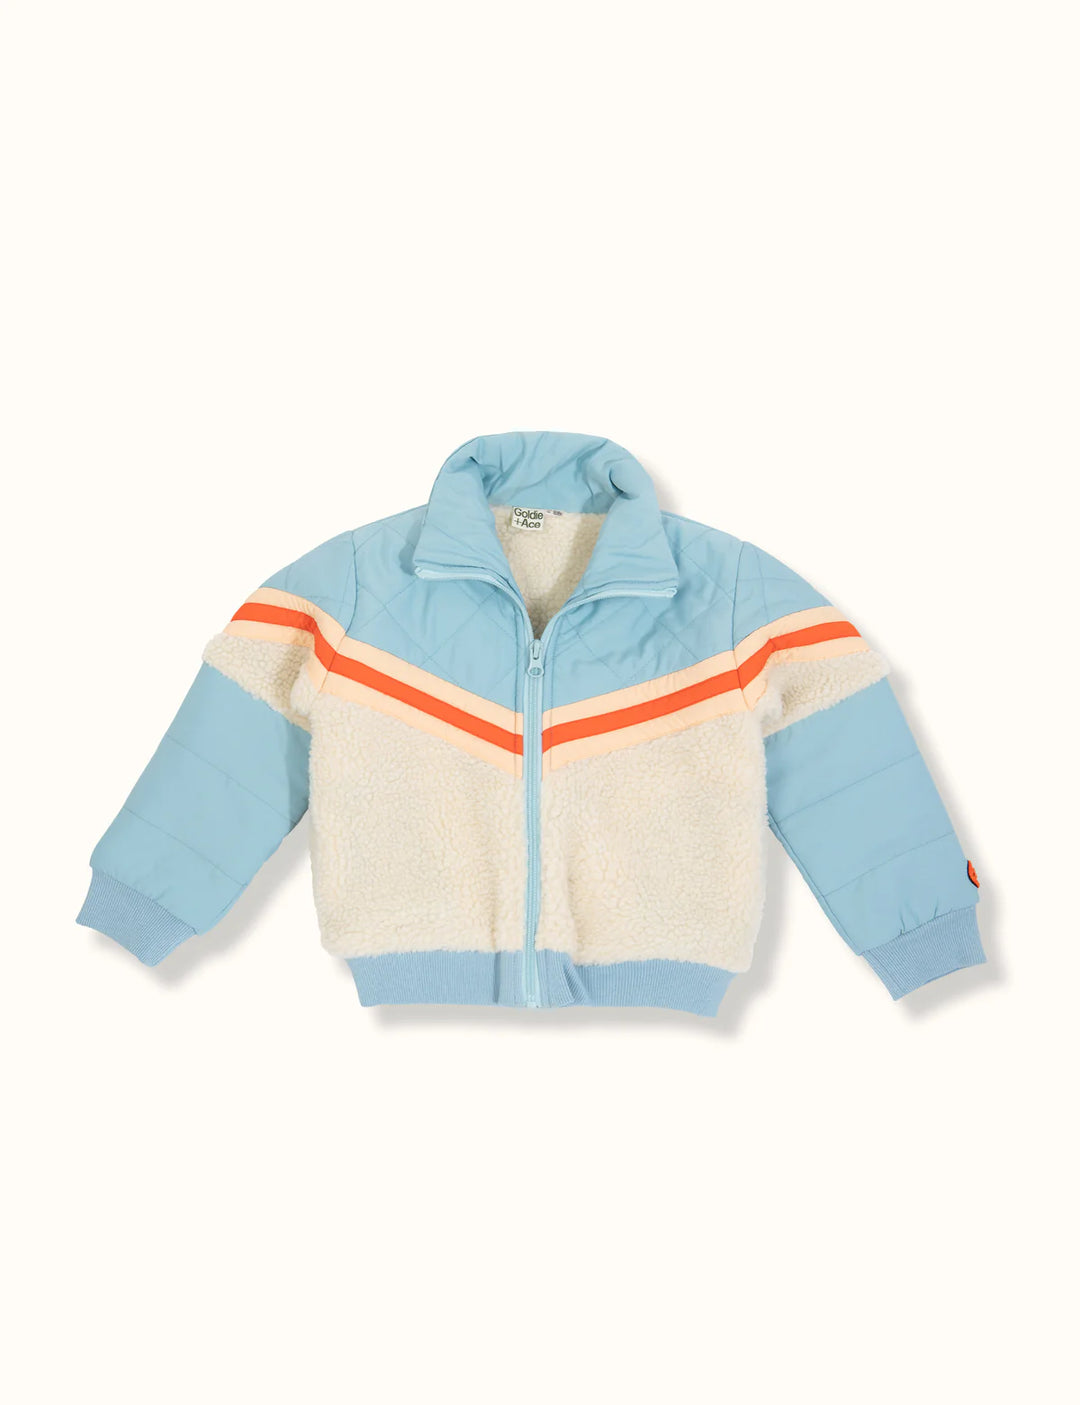 Kobe jacket - JL & CO. boutique 